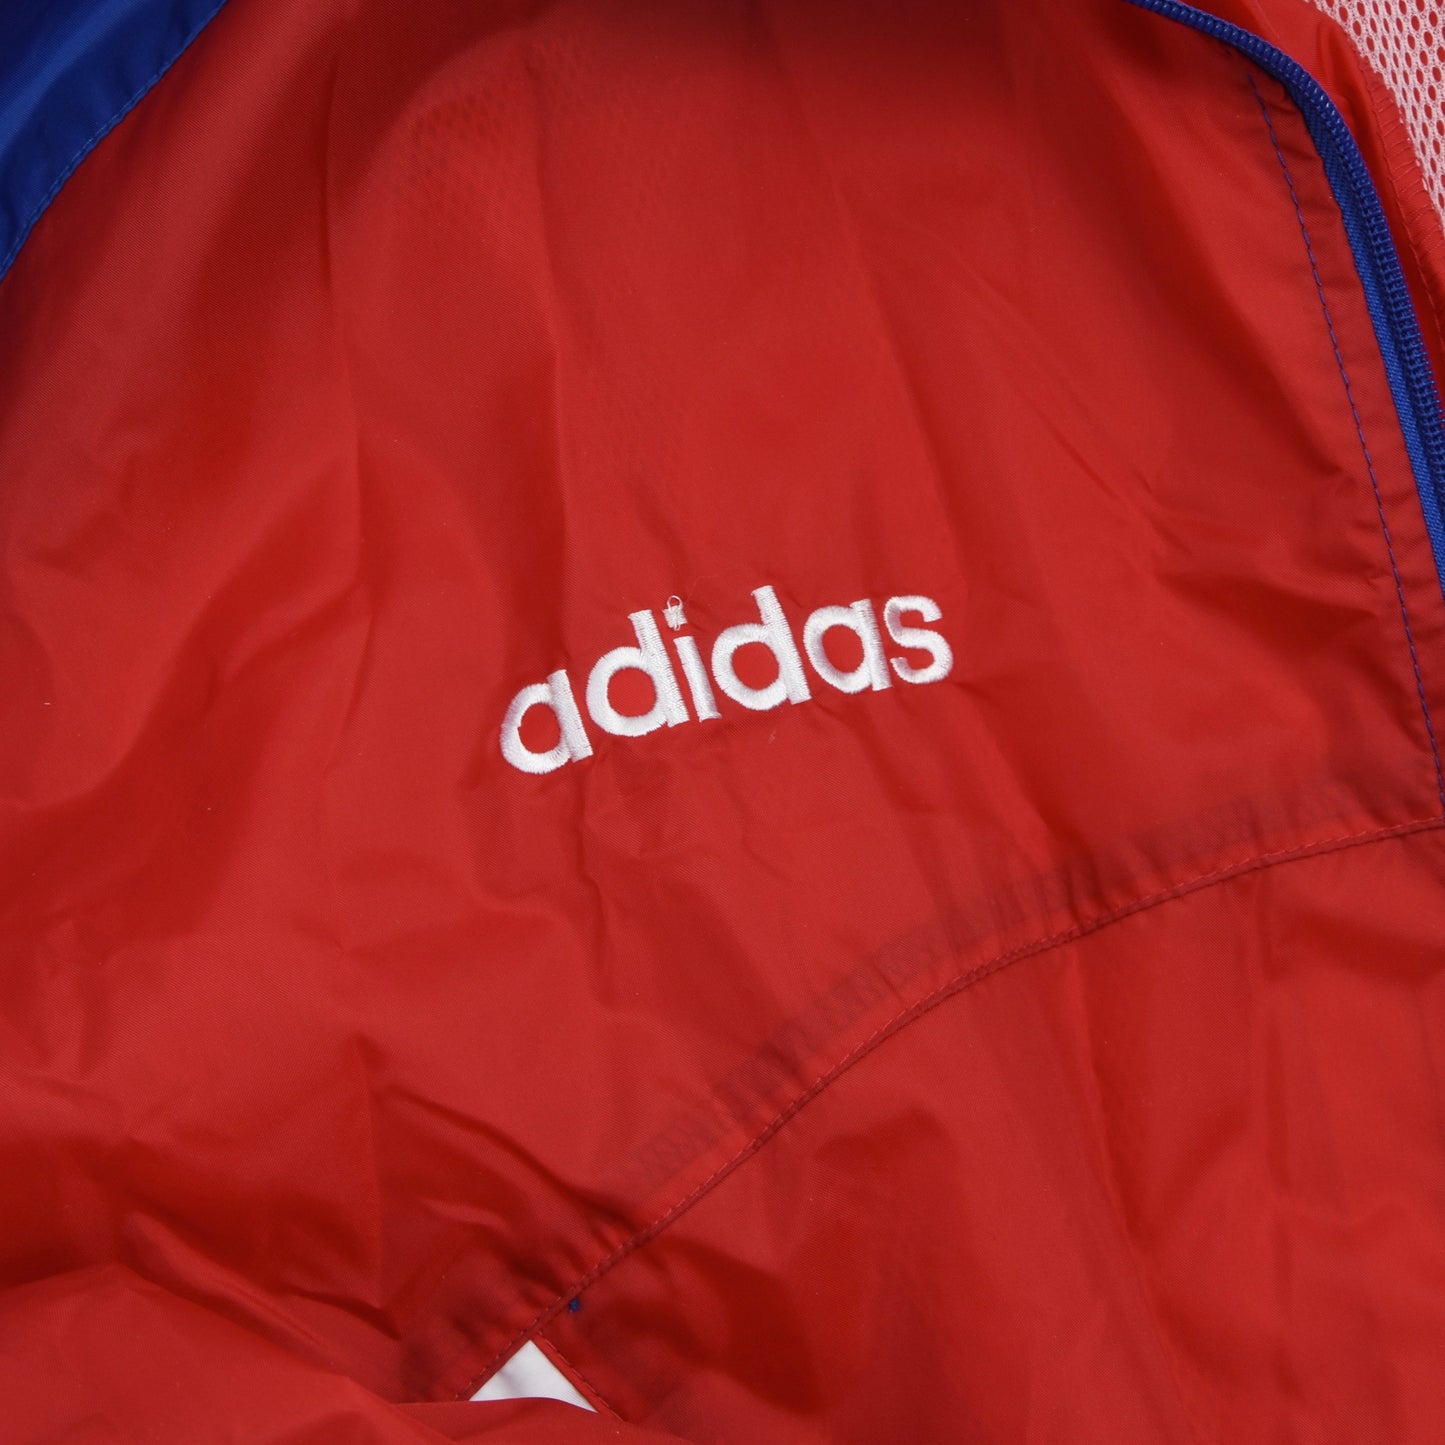 Vintage Adidas F.C. Bayern München Nylon Jacket Size D9